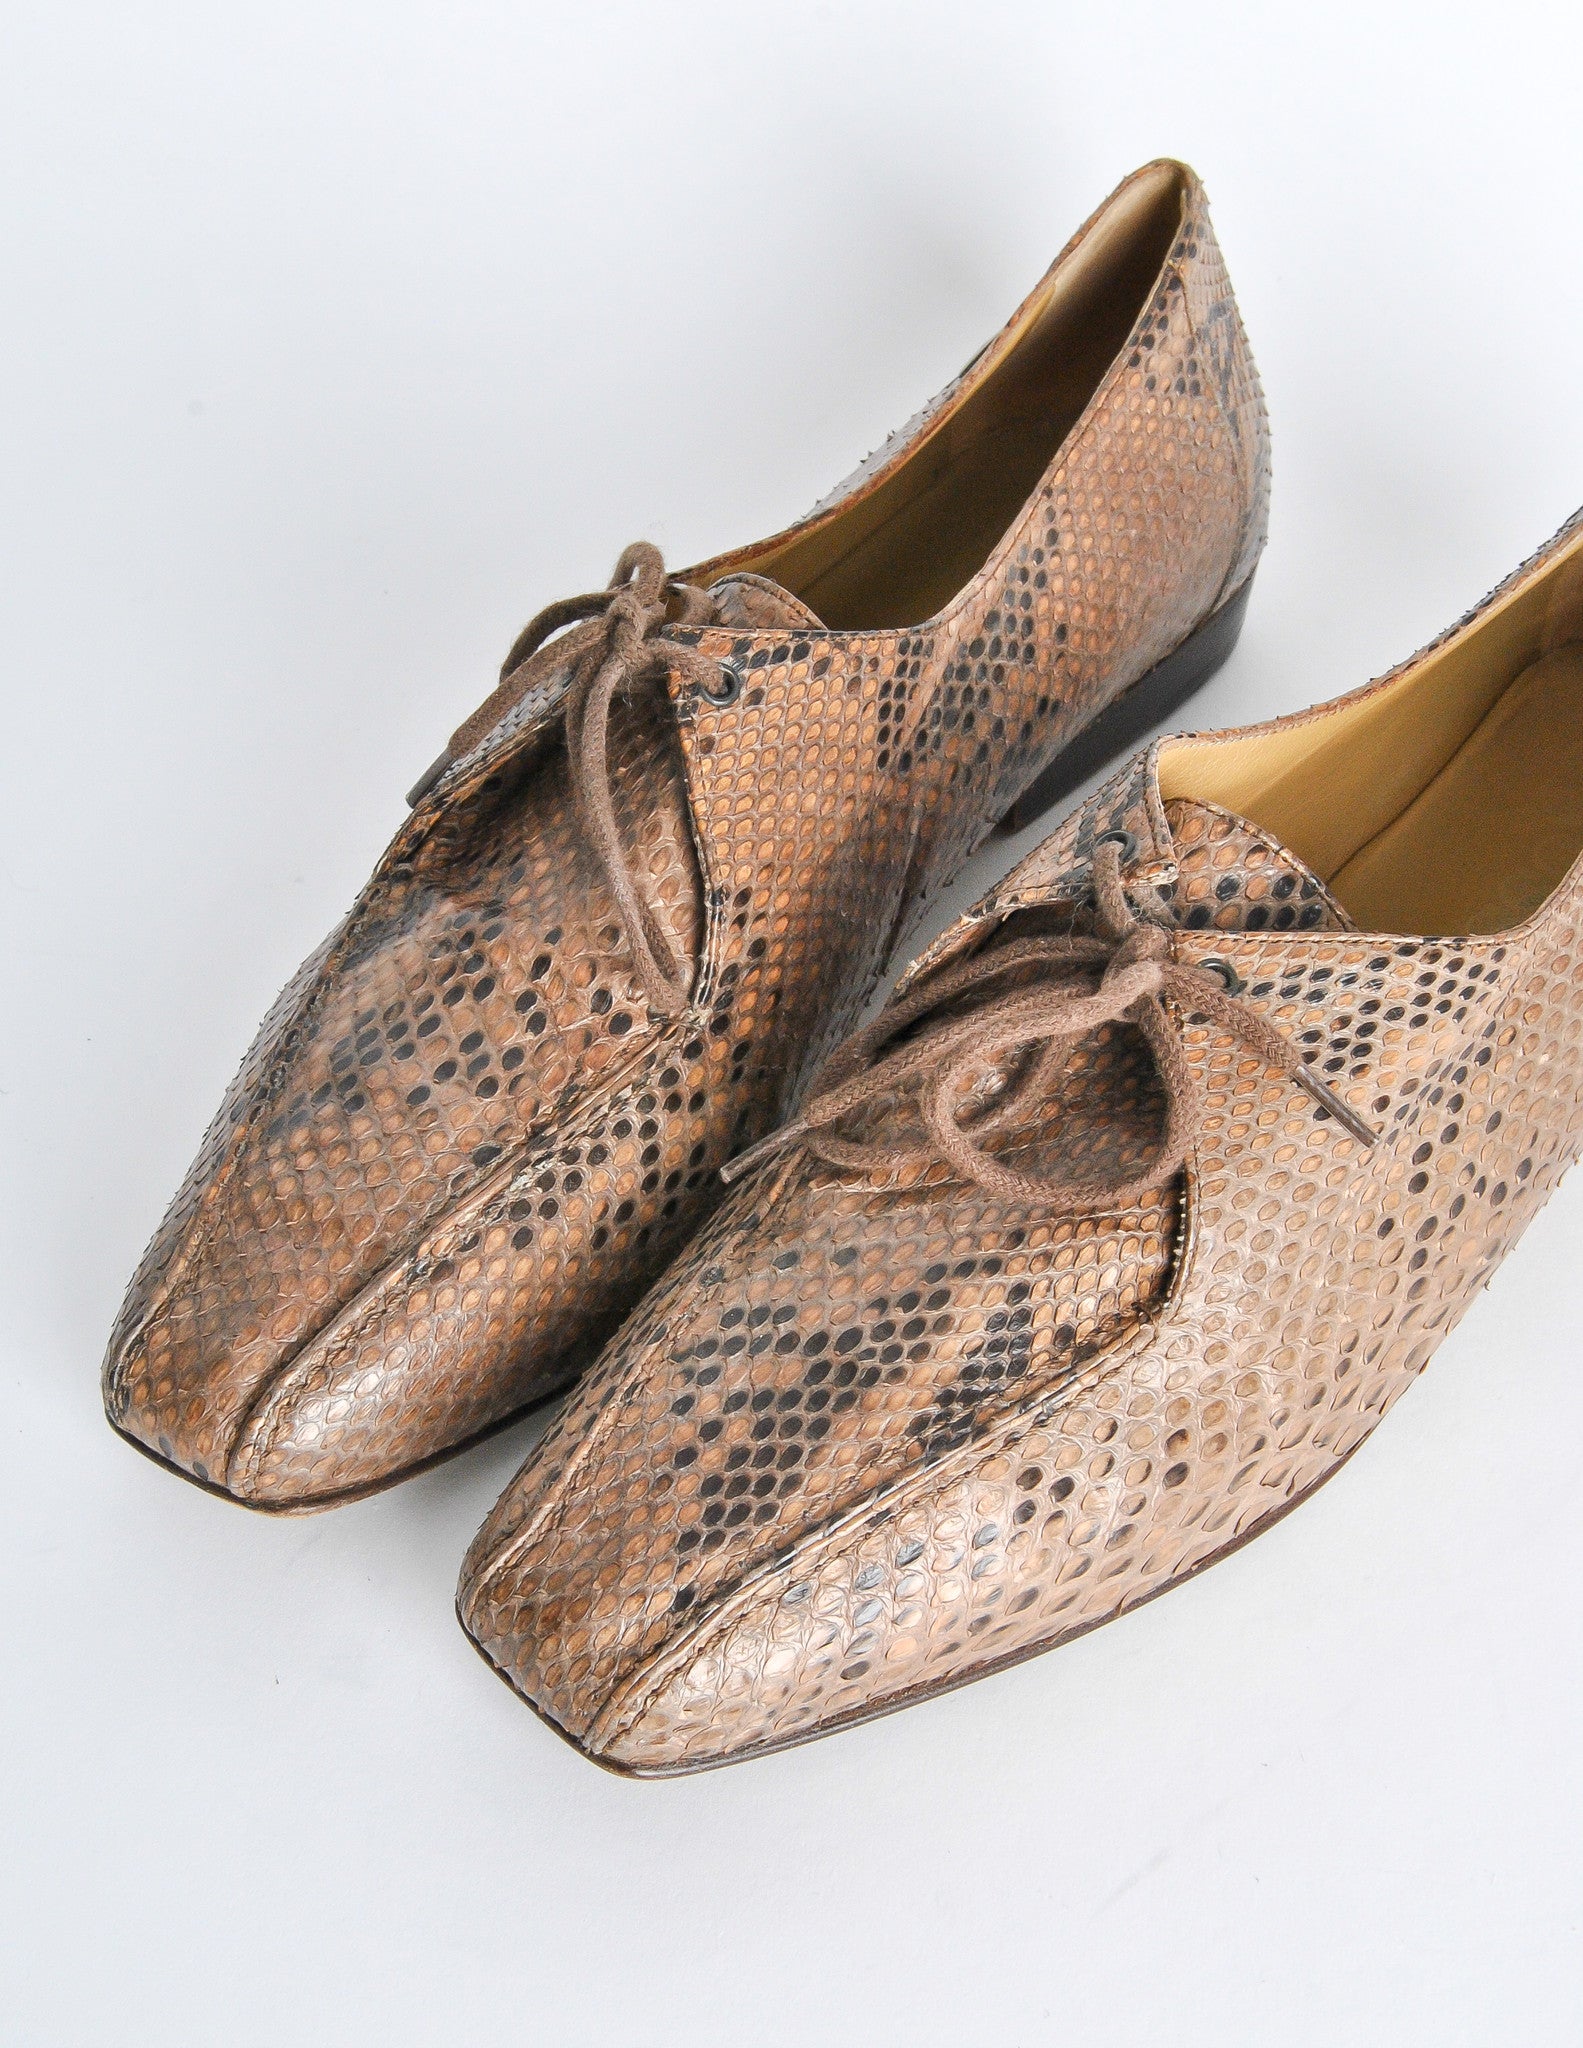 Trussardi Vintage Snakeskin Oxford Shoes - from Amarcord Vintage Fashion